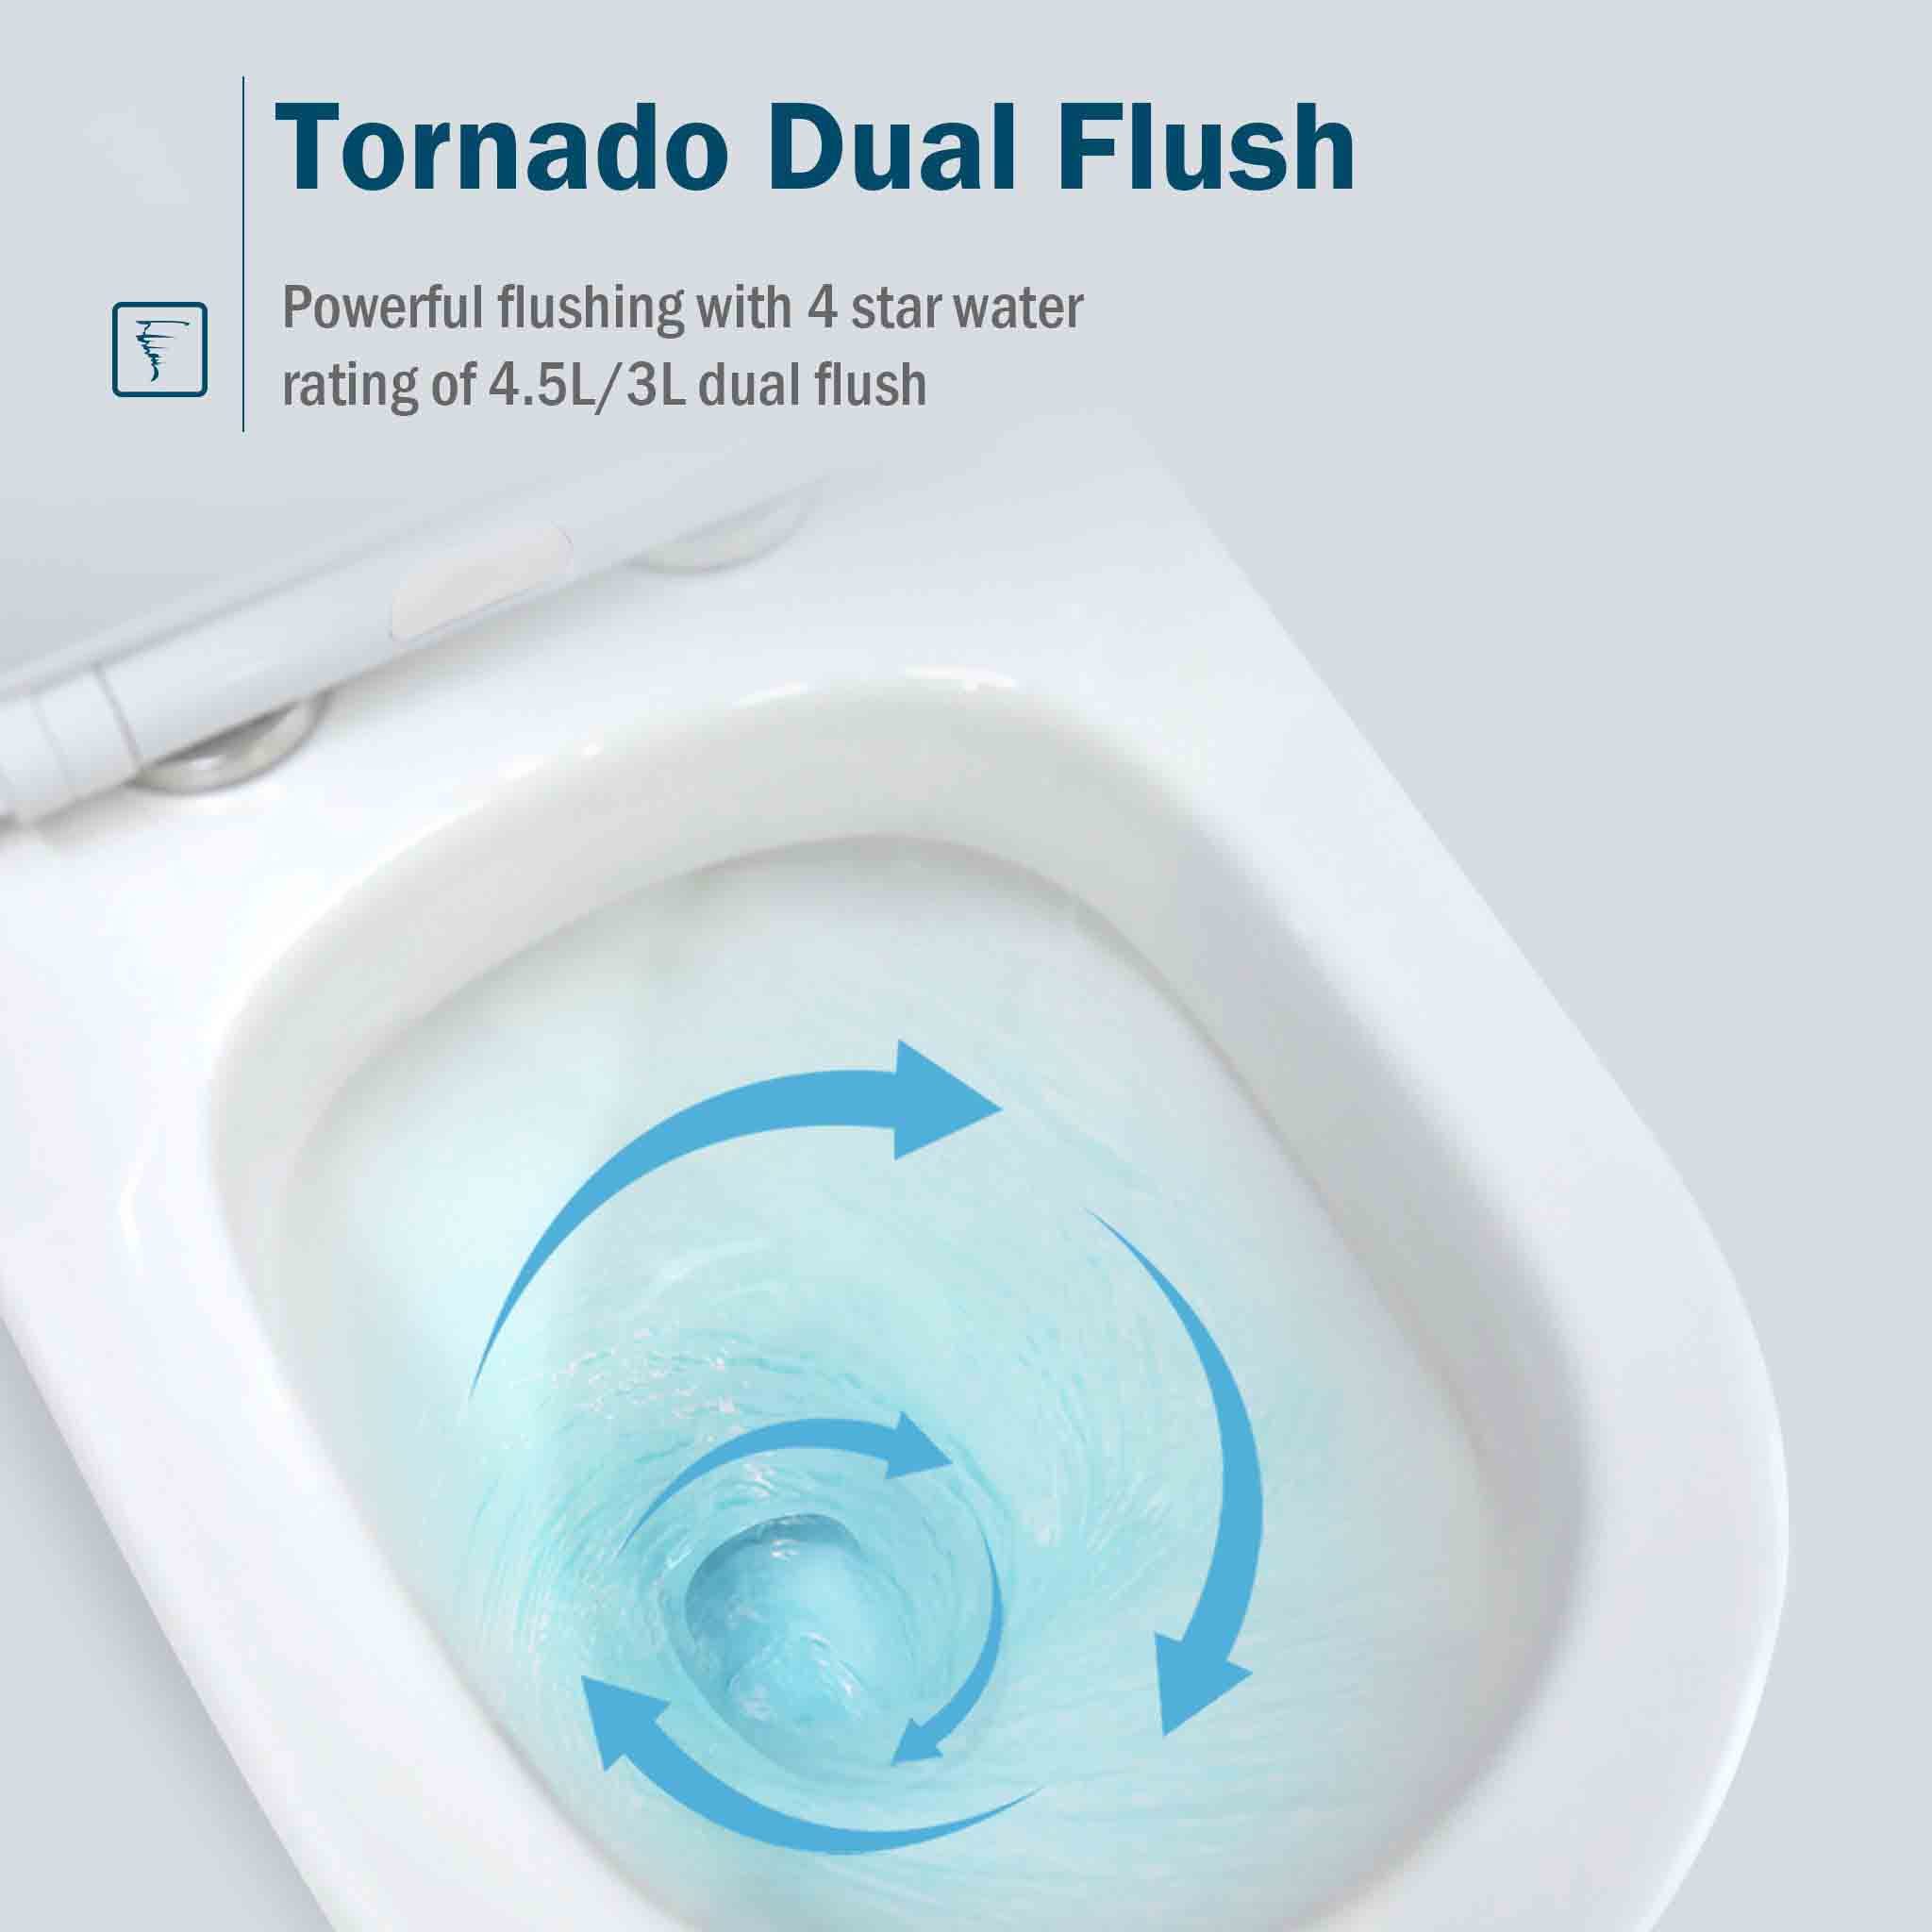 What is Tornado Flush?